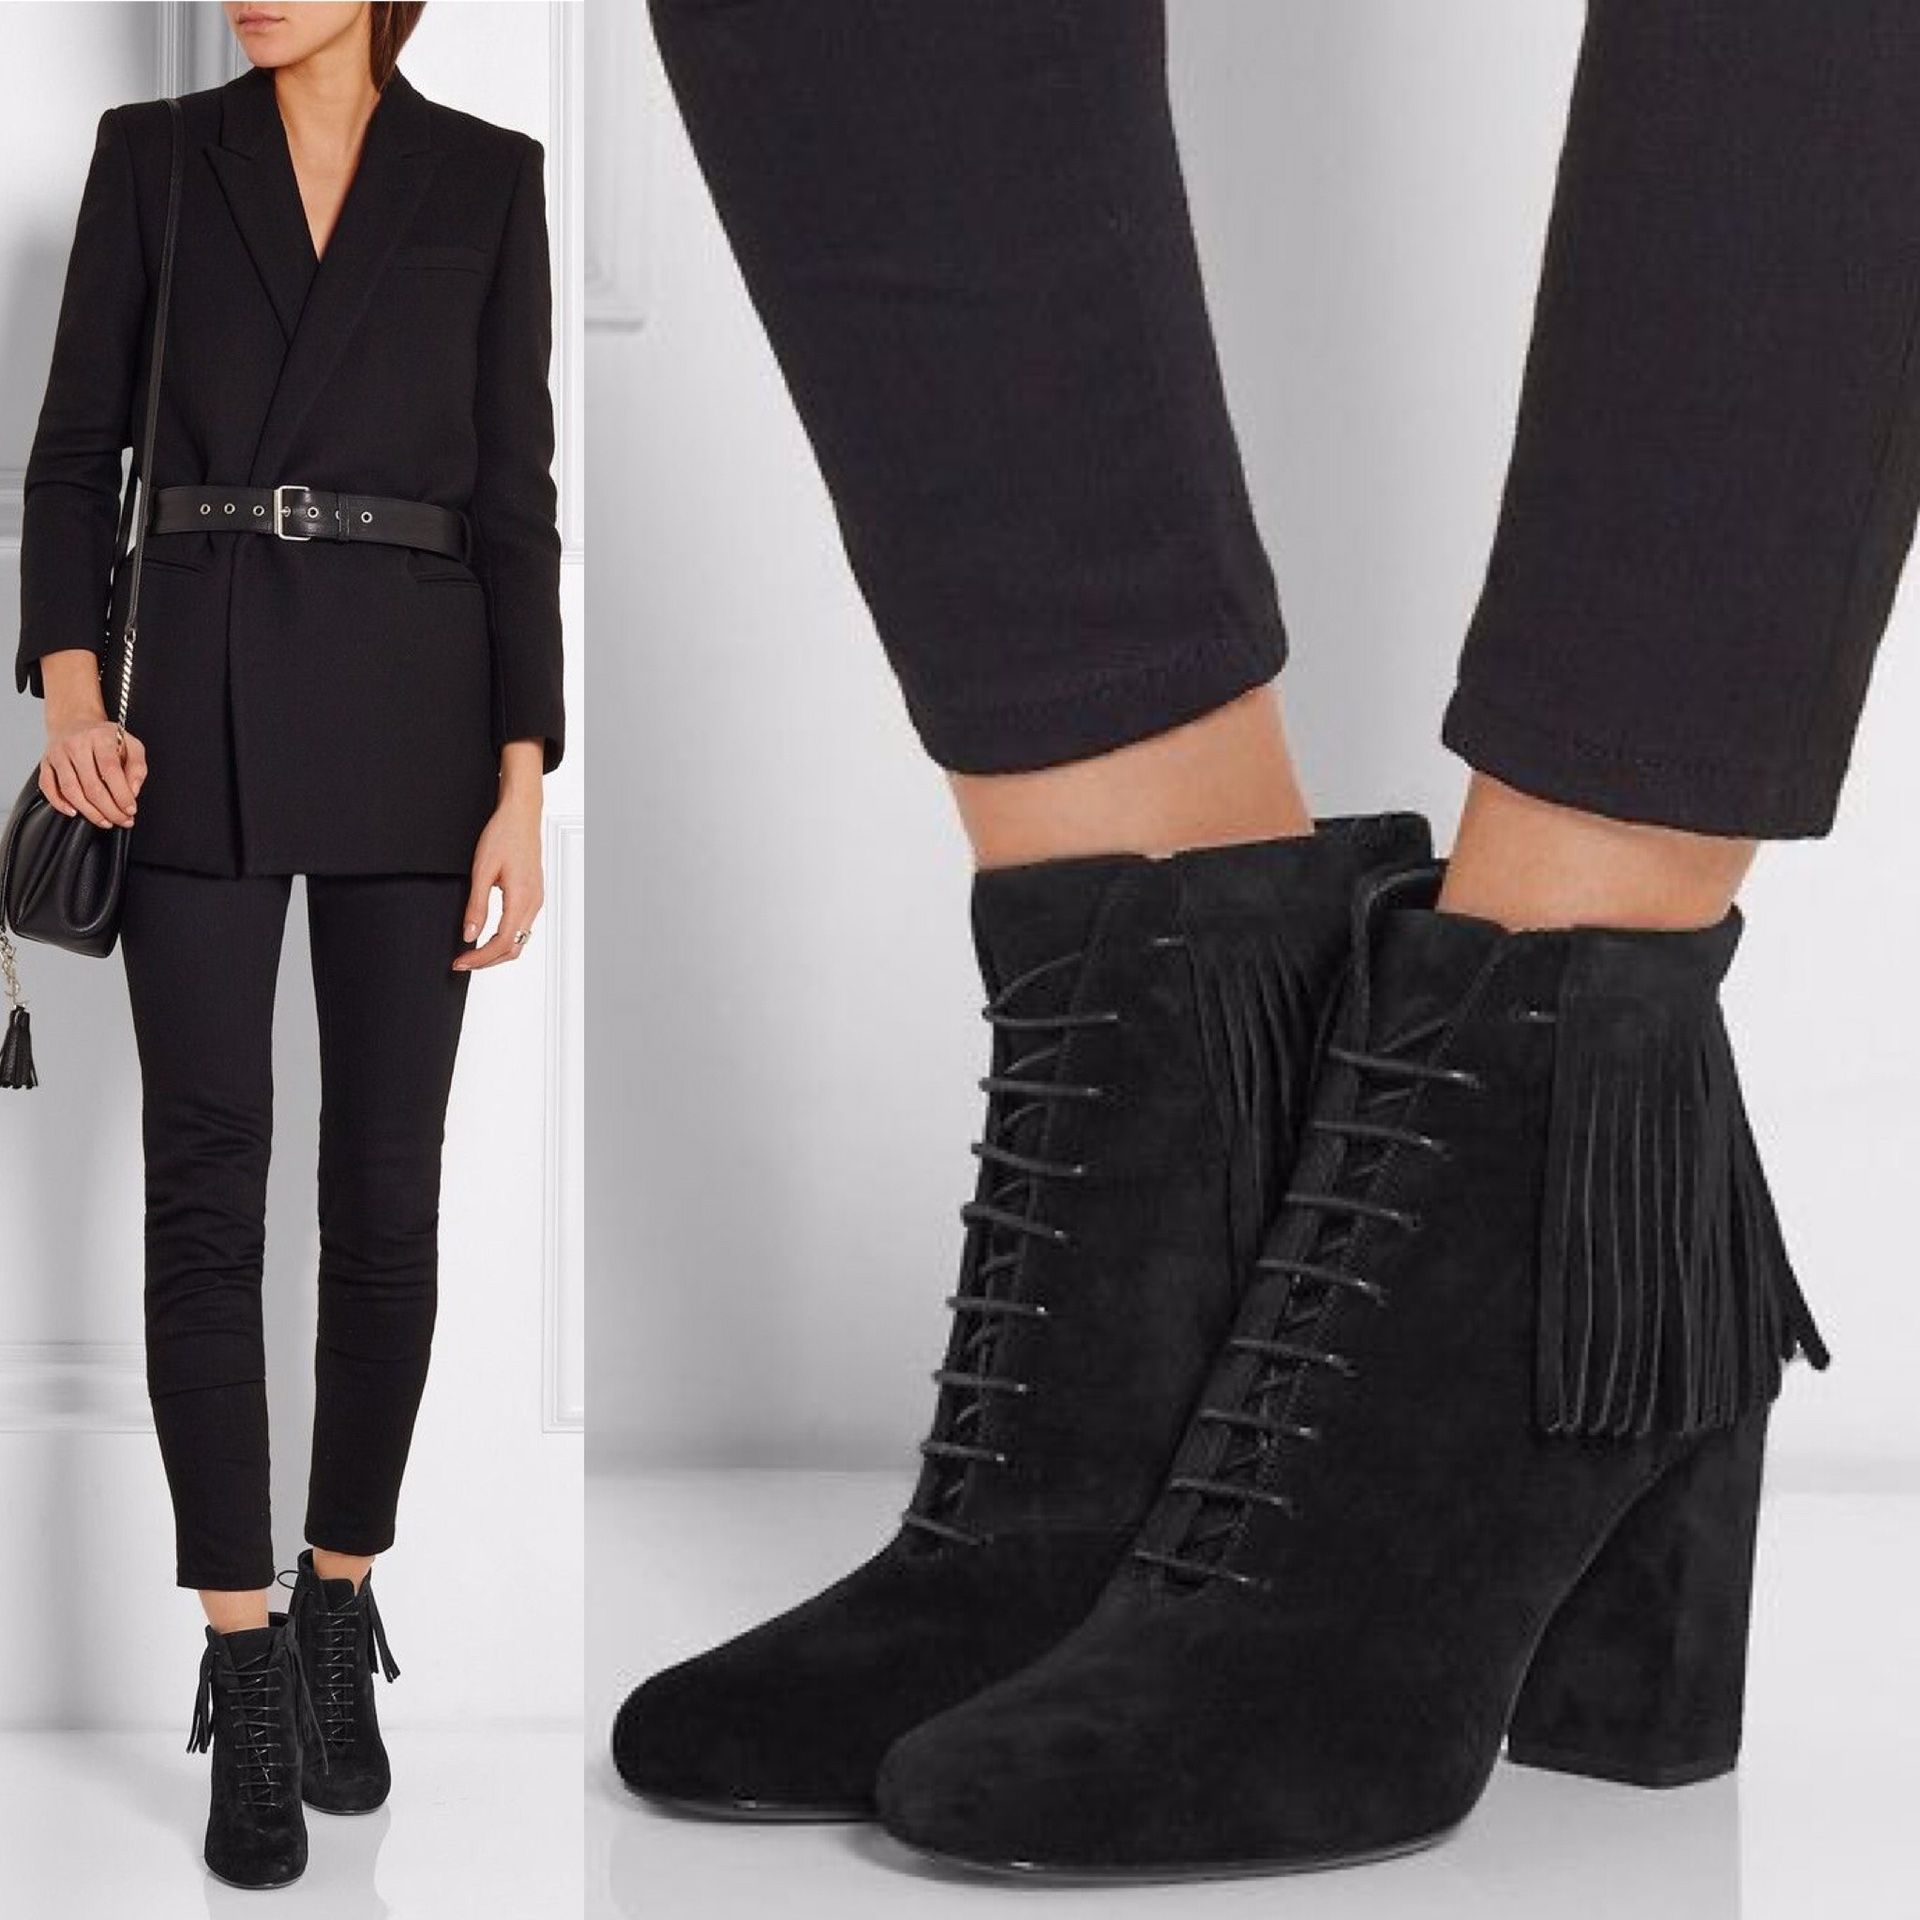 Saint Laurent 'Babies' Fringed black suede lace-up ankle boot size 40